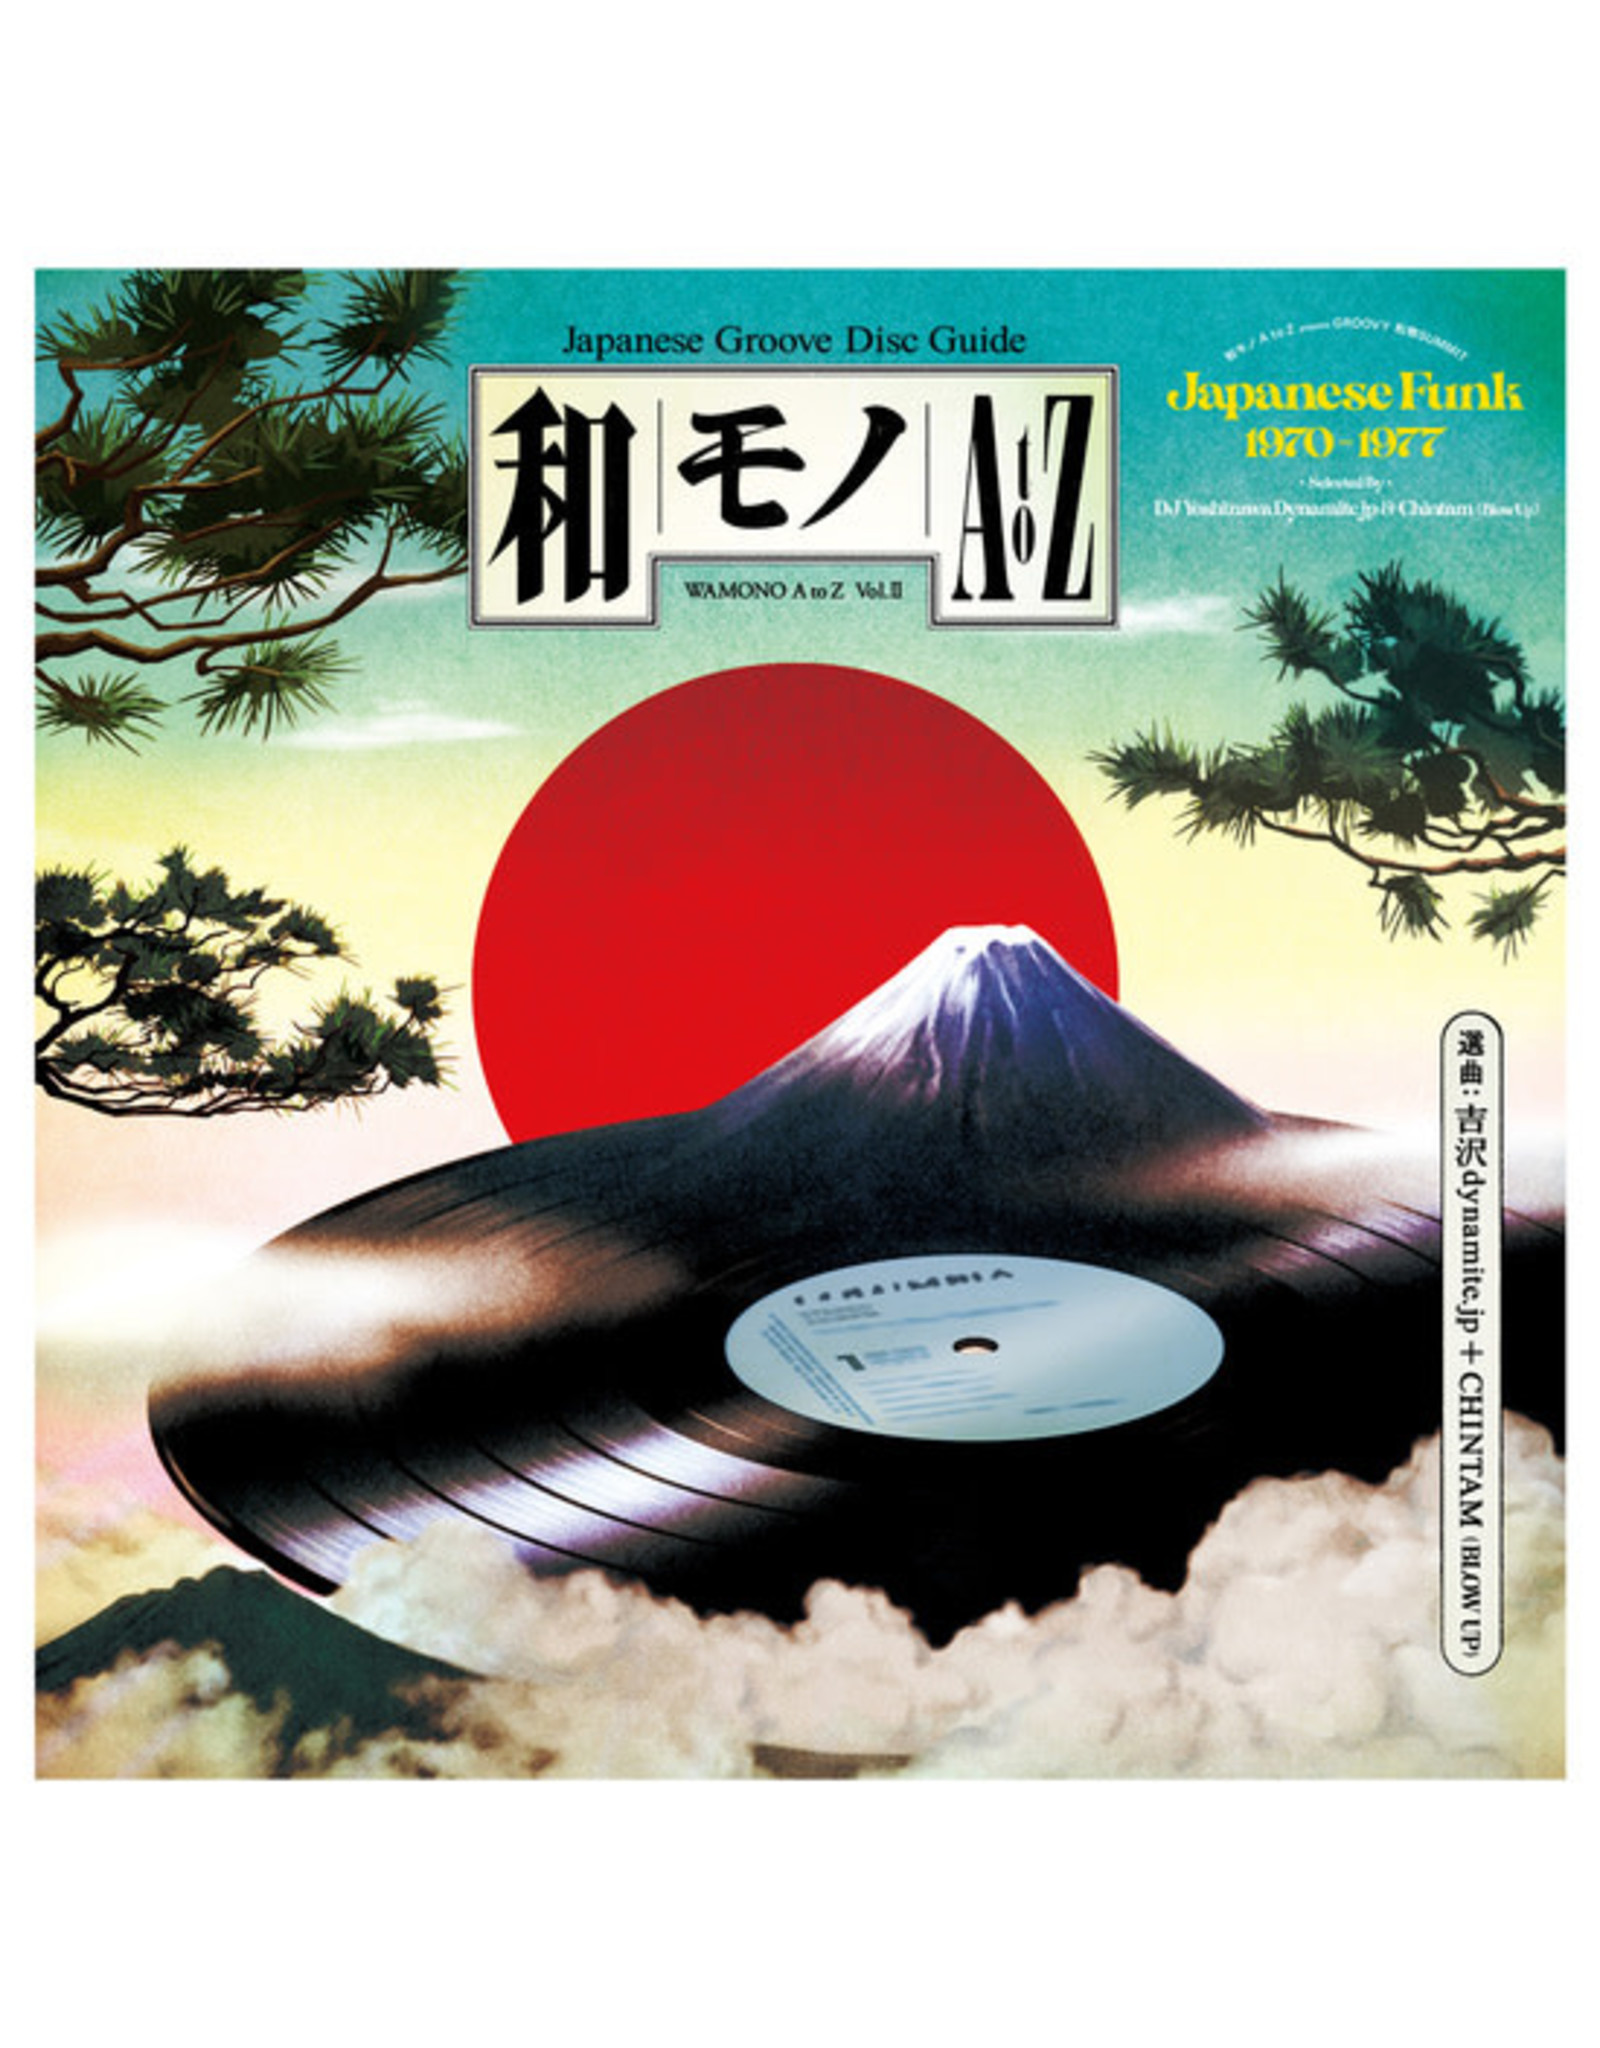 180g Various: Wamono A to Z Vol. II - Japanese Funk 1970 - 1977 LP